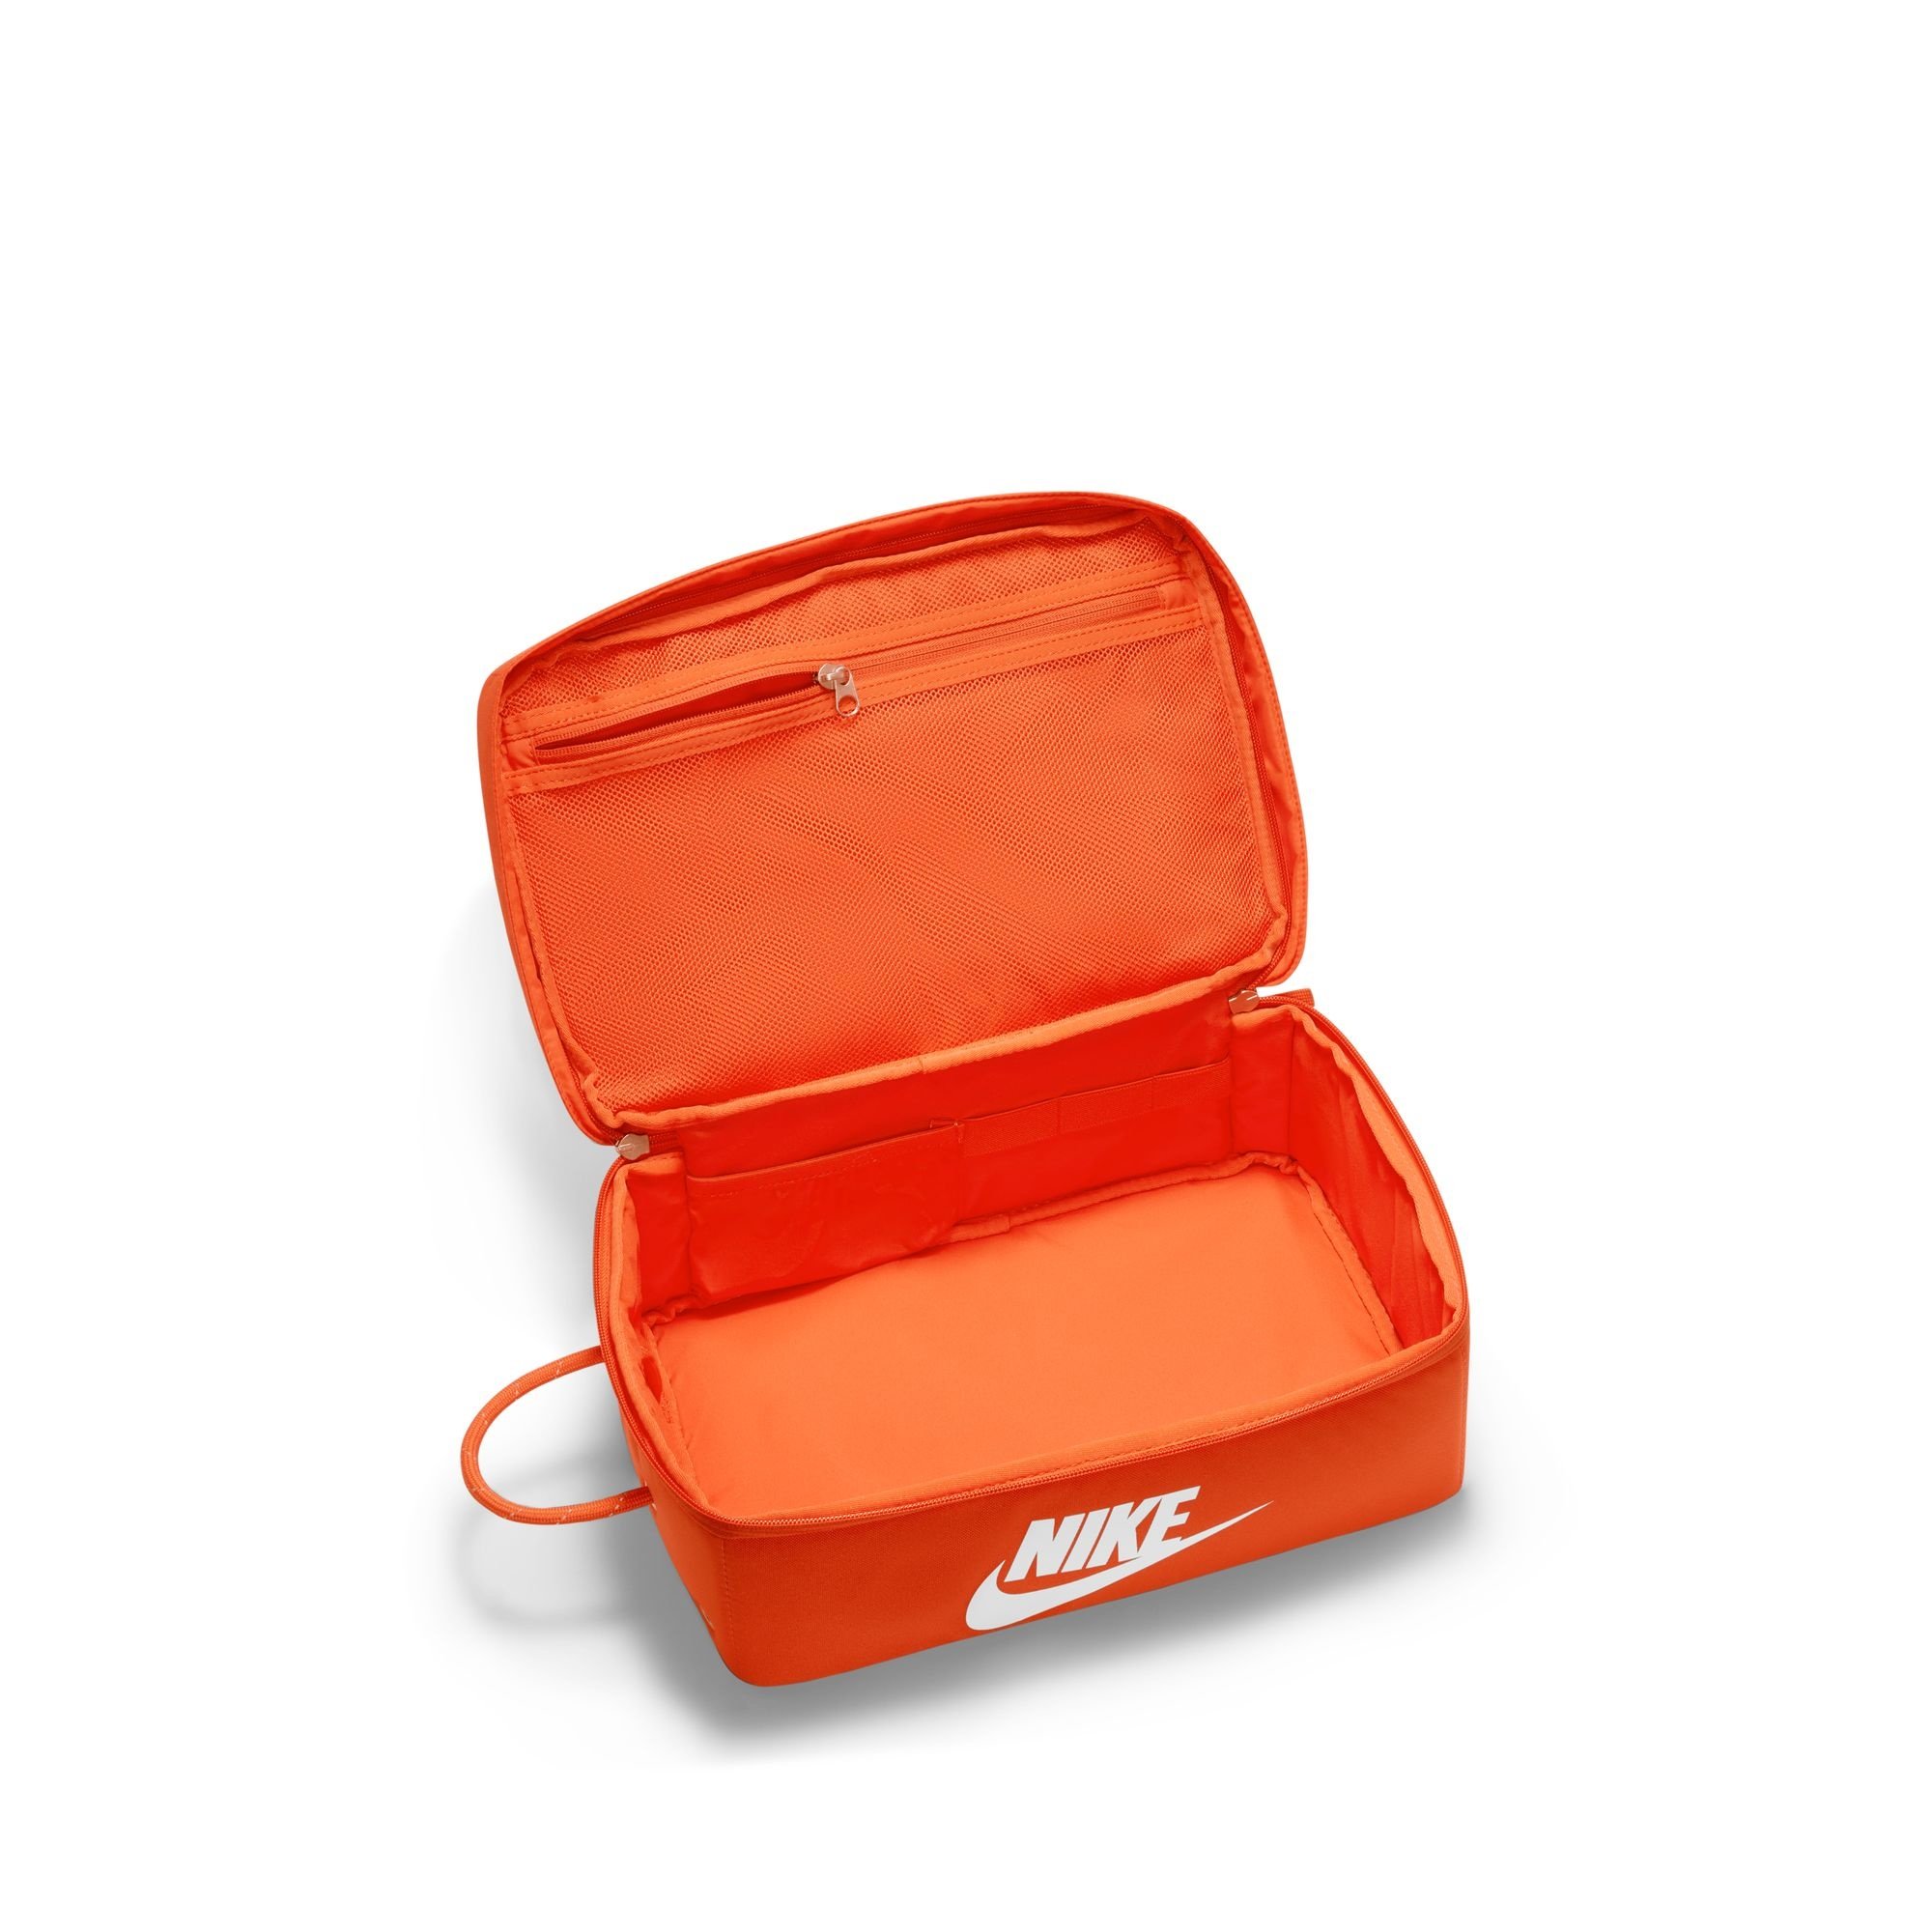 Nike Shoe Box Bag - Orange/Orange/White - MODA3